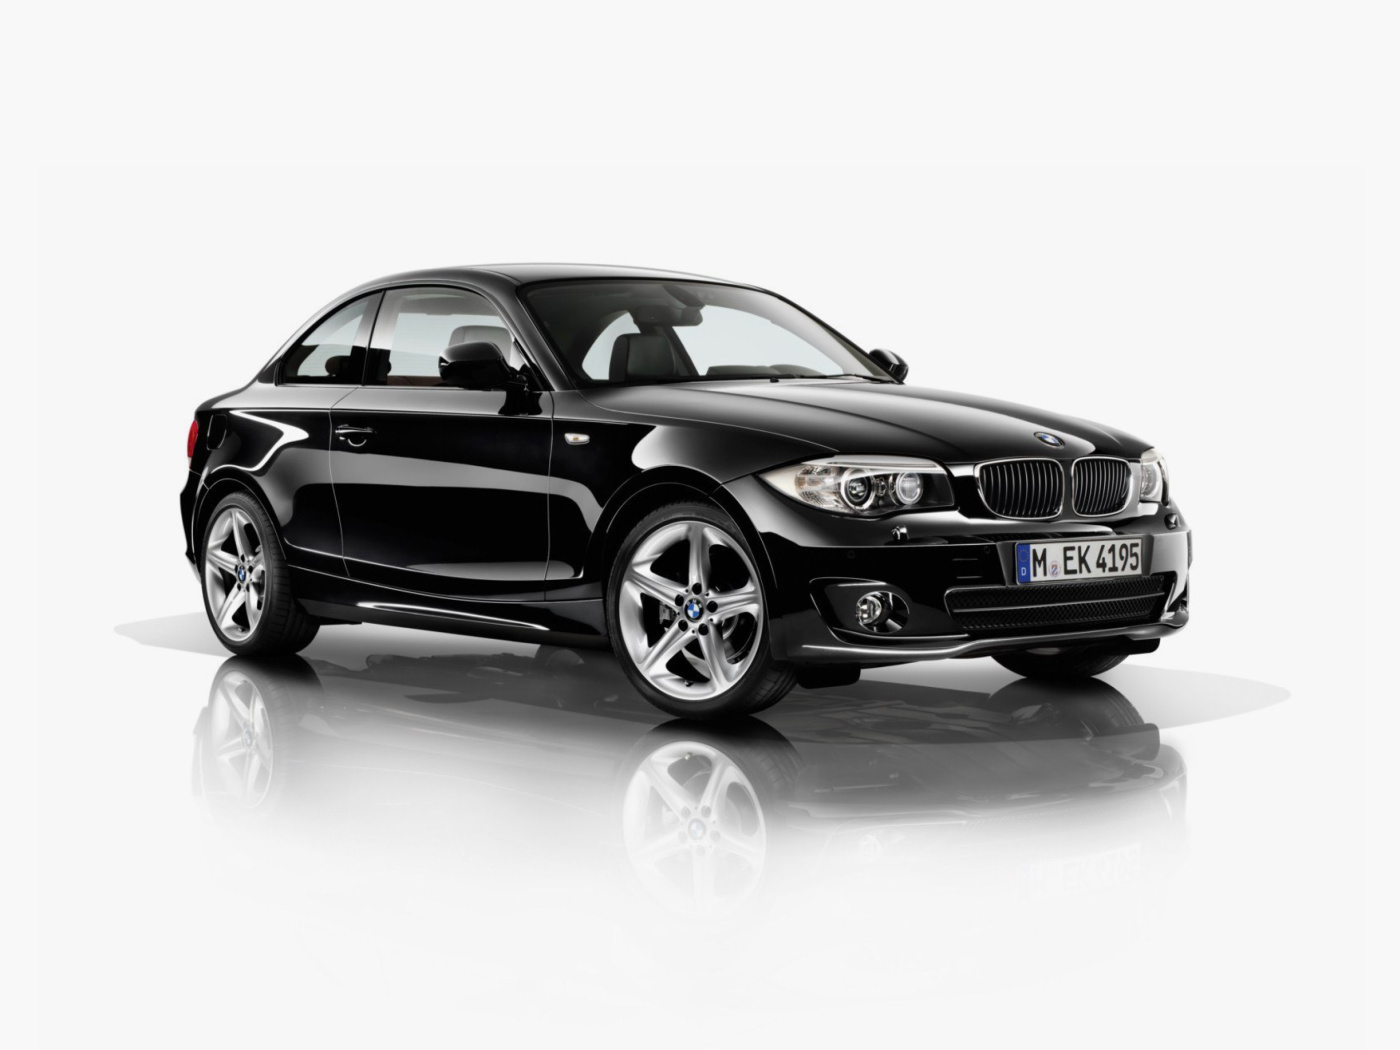 BMW 125i black Coupe wallpaper 1400x1050